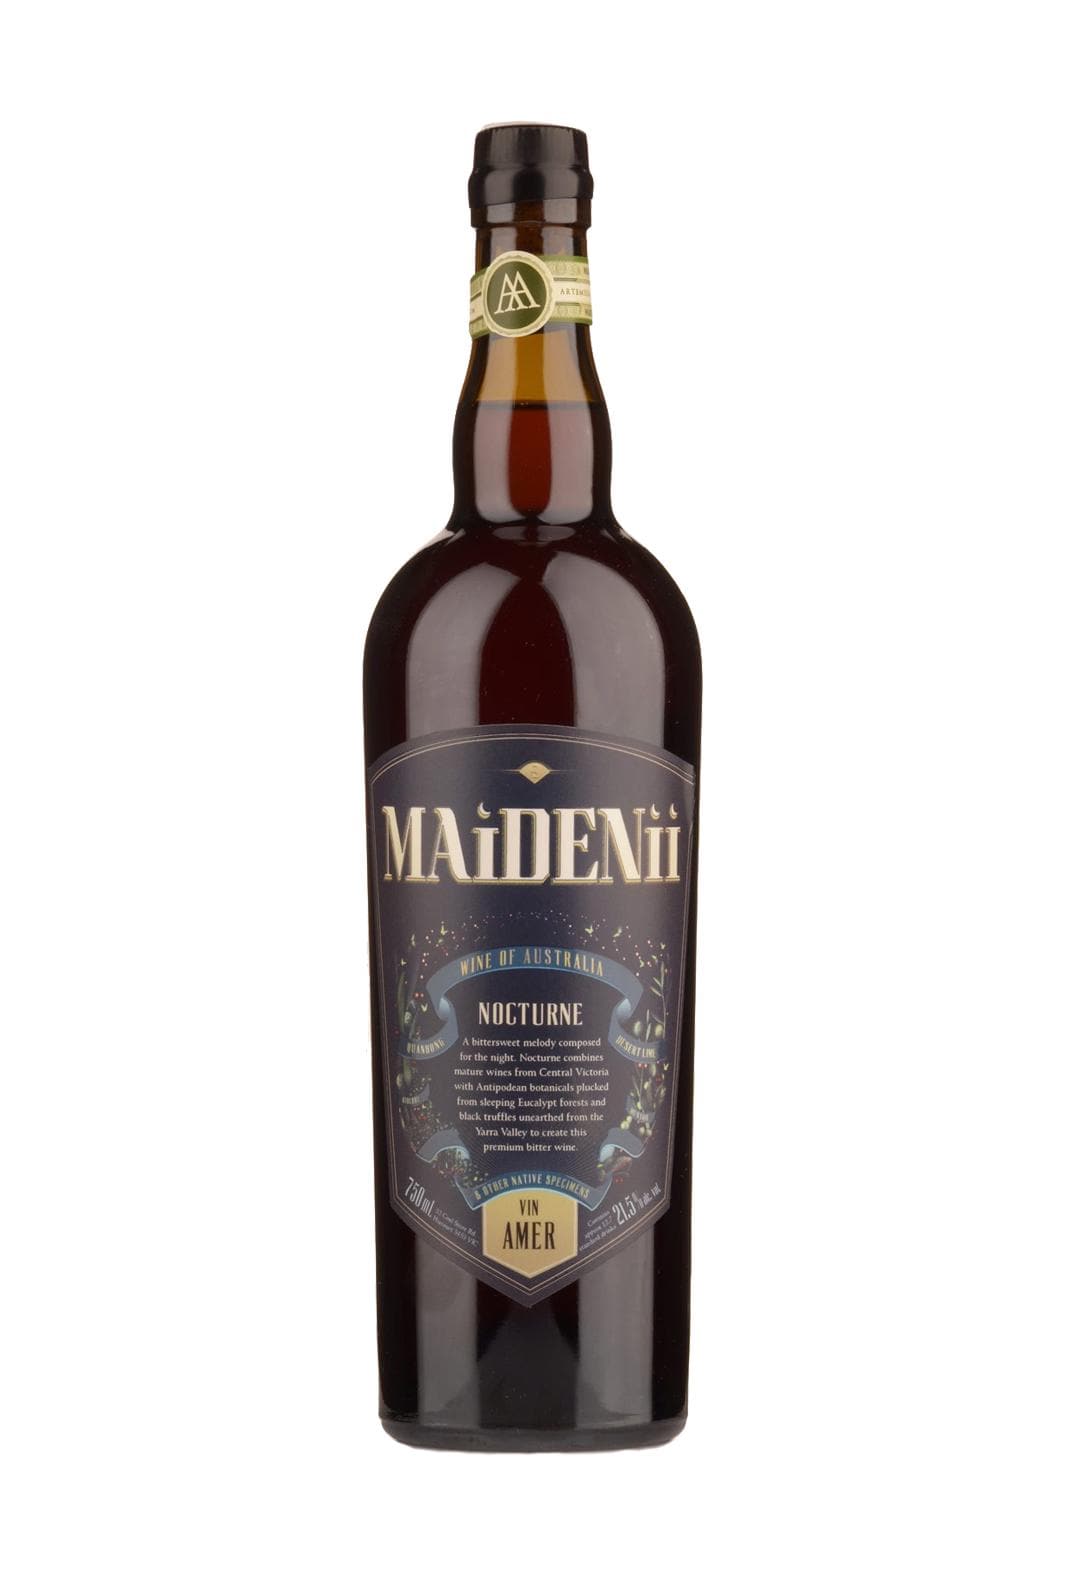 Maidenii Bitter Amer Nocturne 21.5% 500ml | Bitters | Shop online at Spirits of France